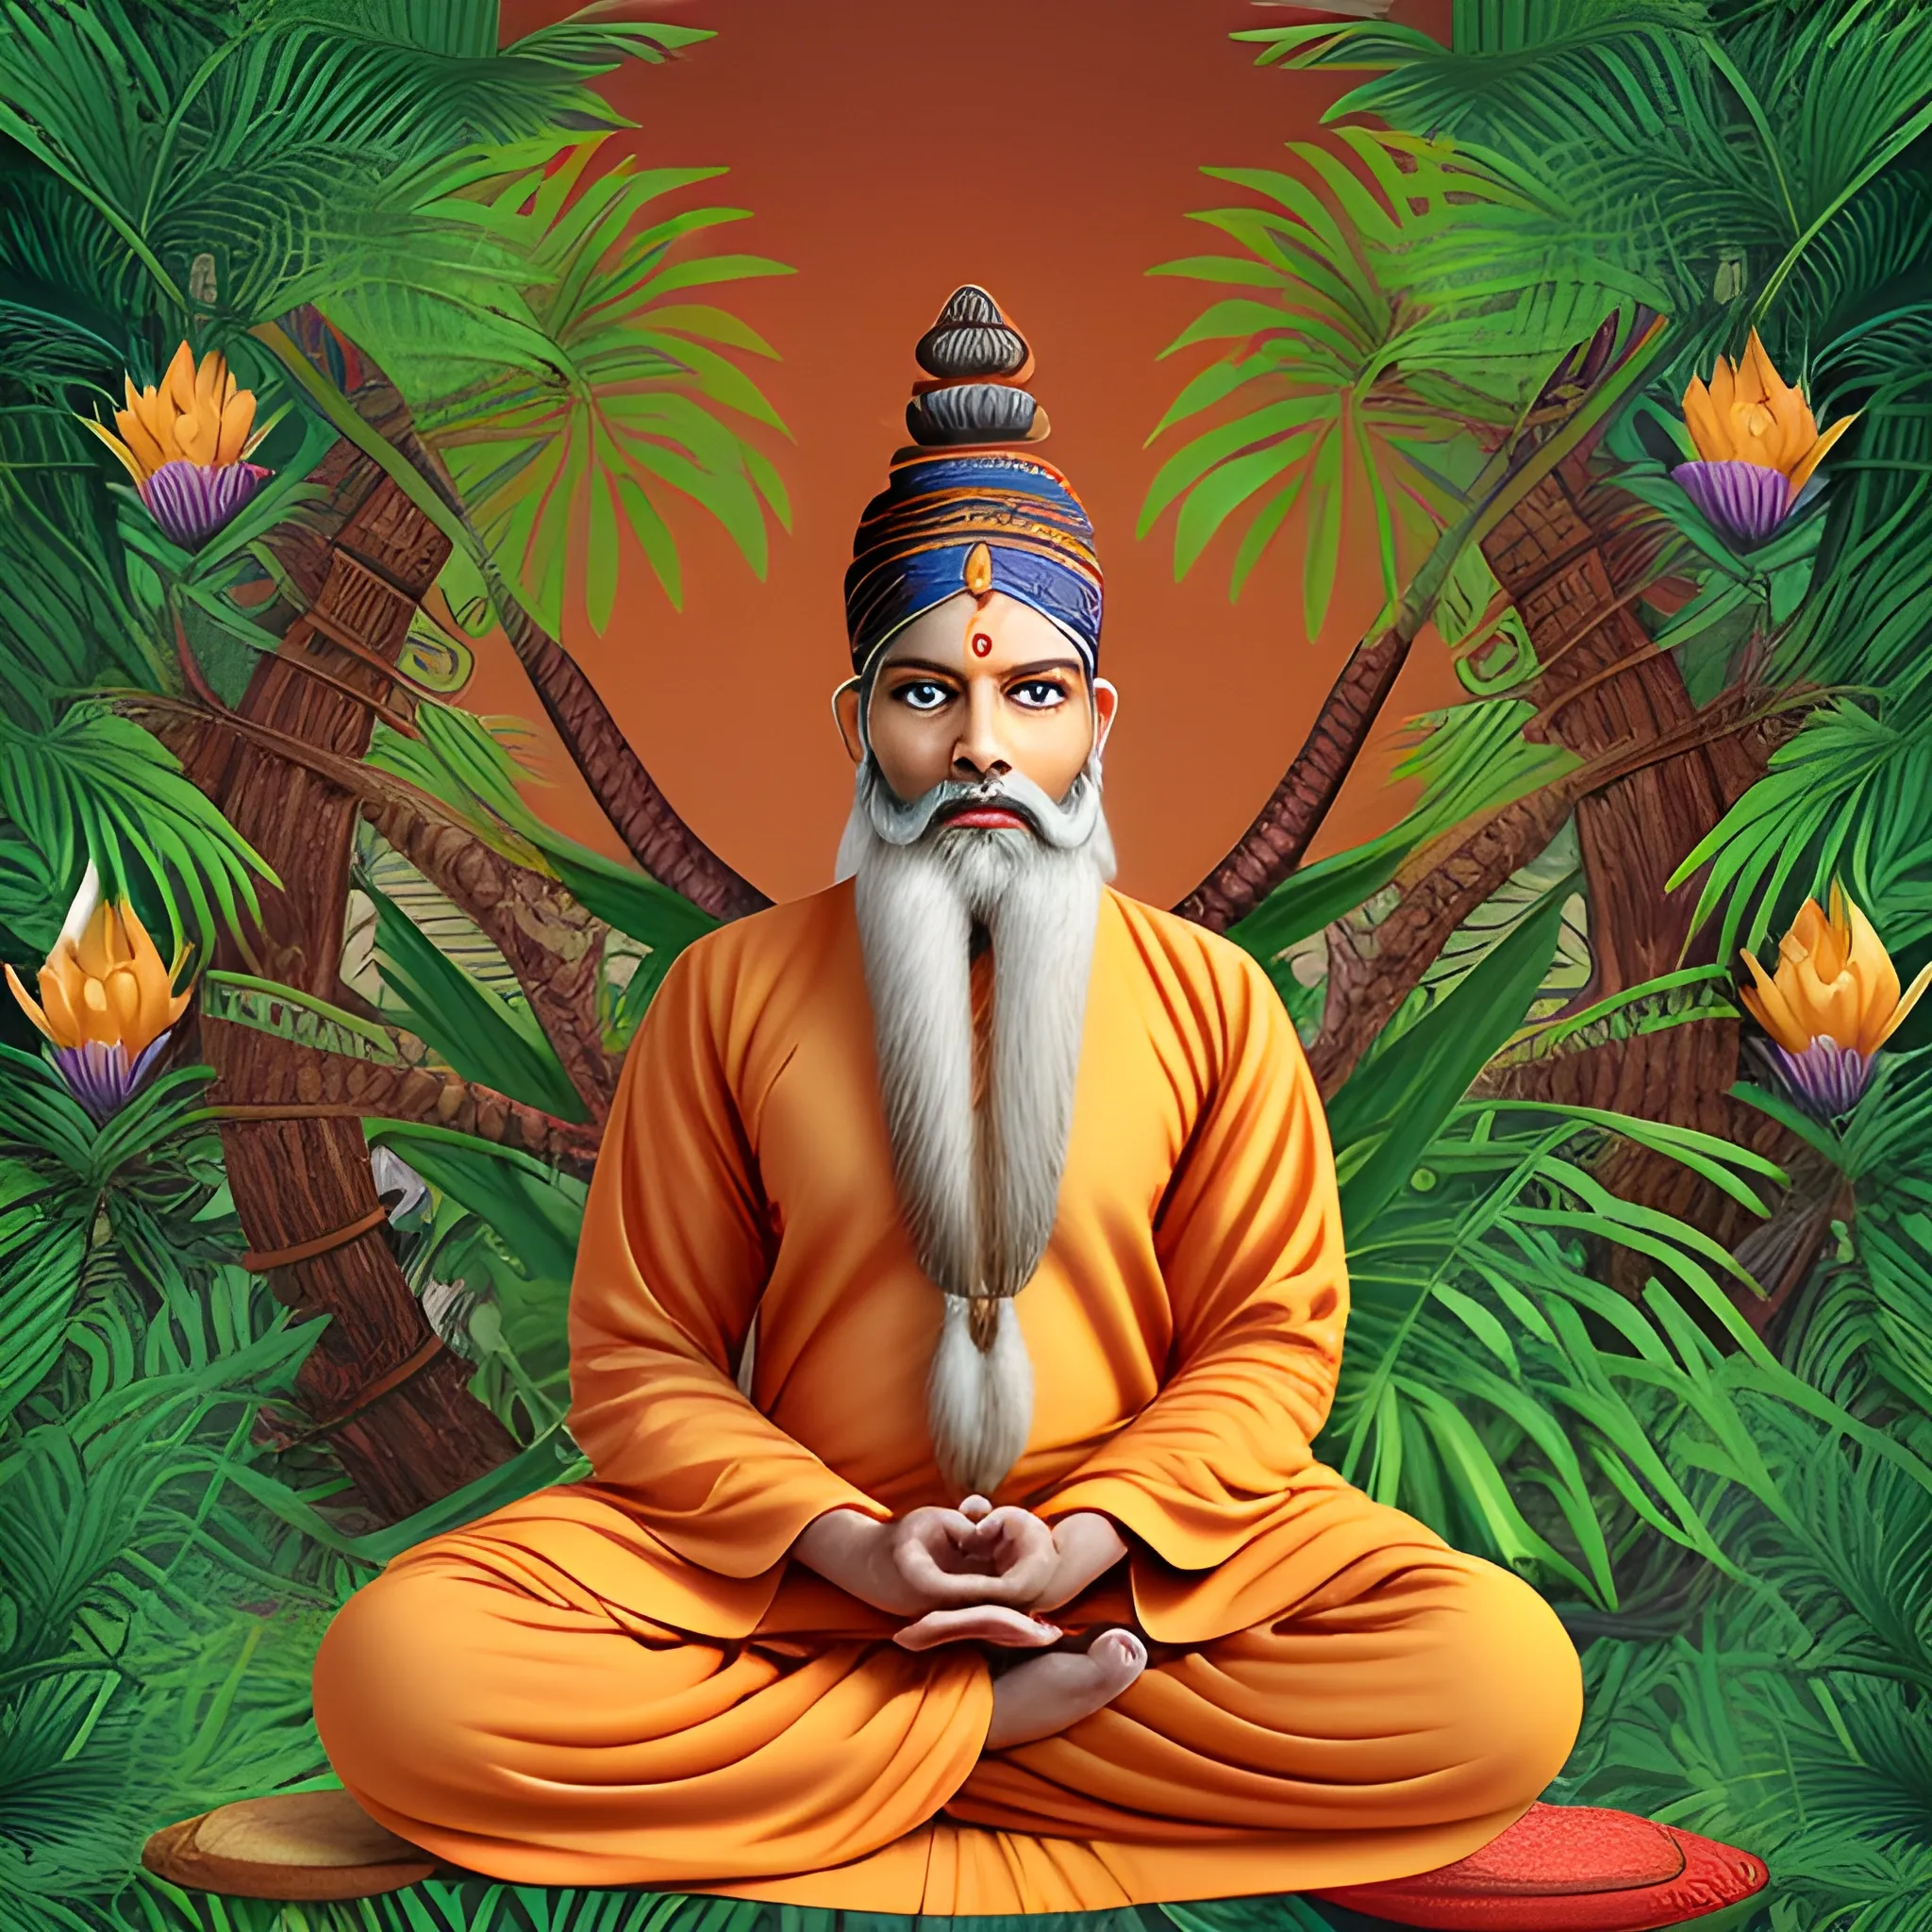 Indian hindu sage, symmetric face, beard, saffron attire, kamandal and vedas in hand, high quality, meditating in jungle, full body